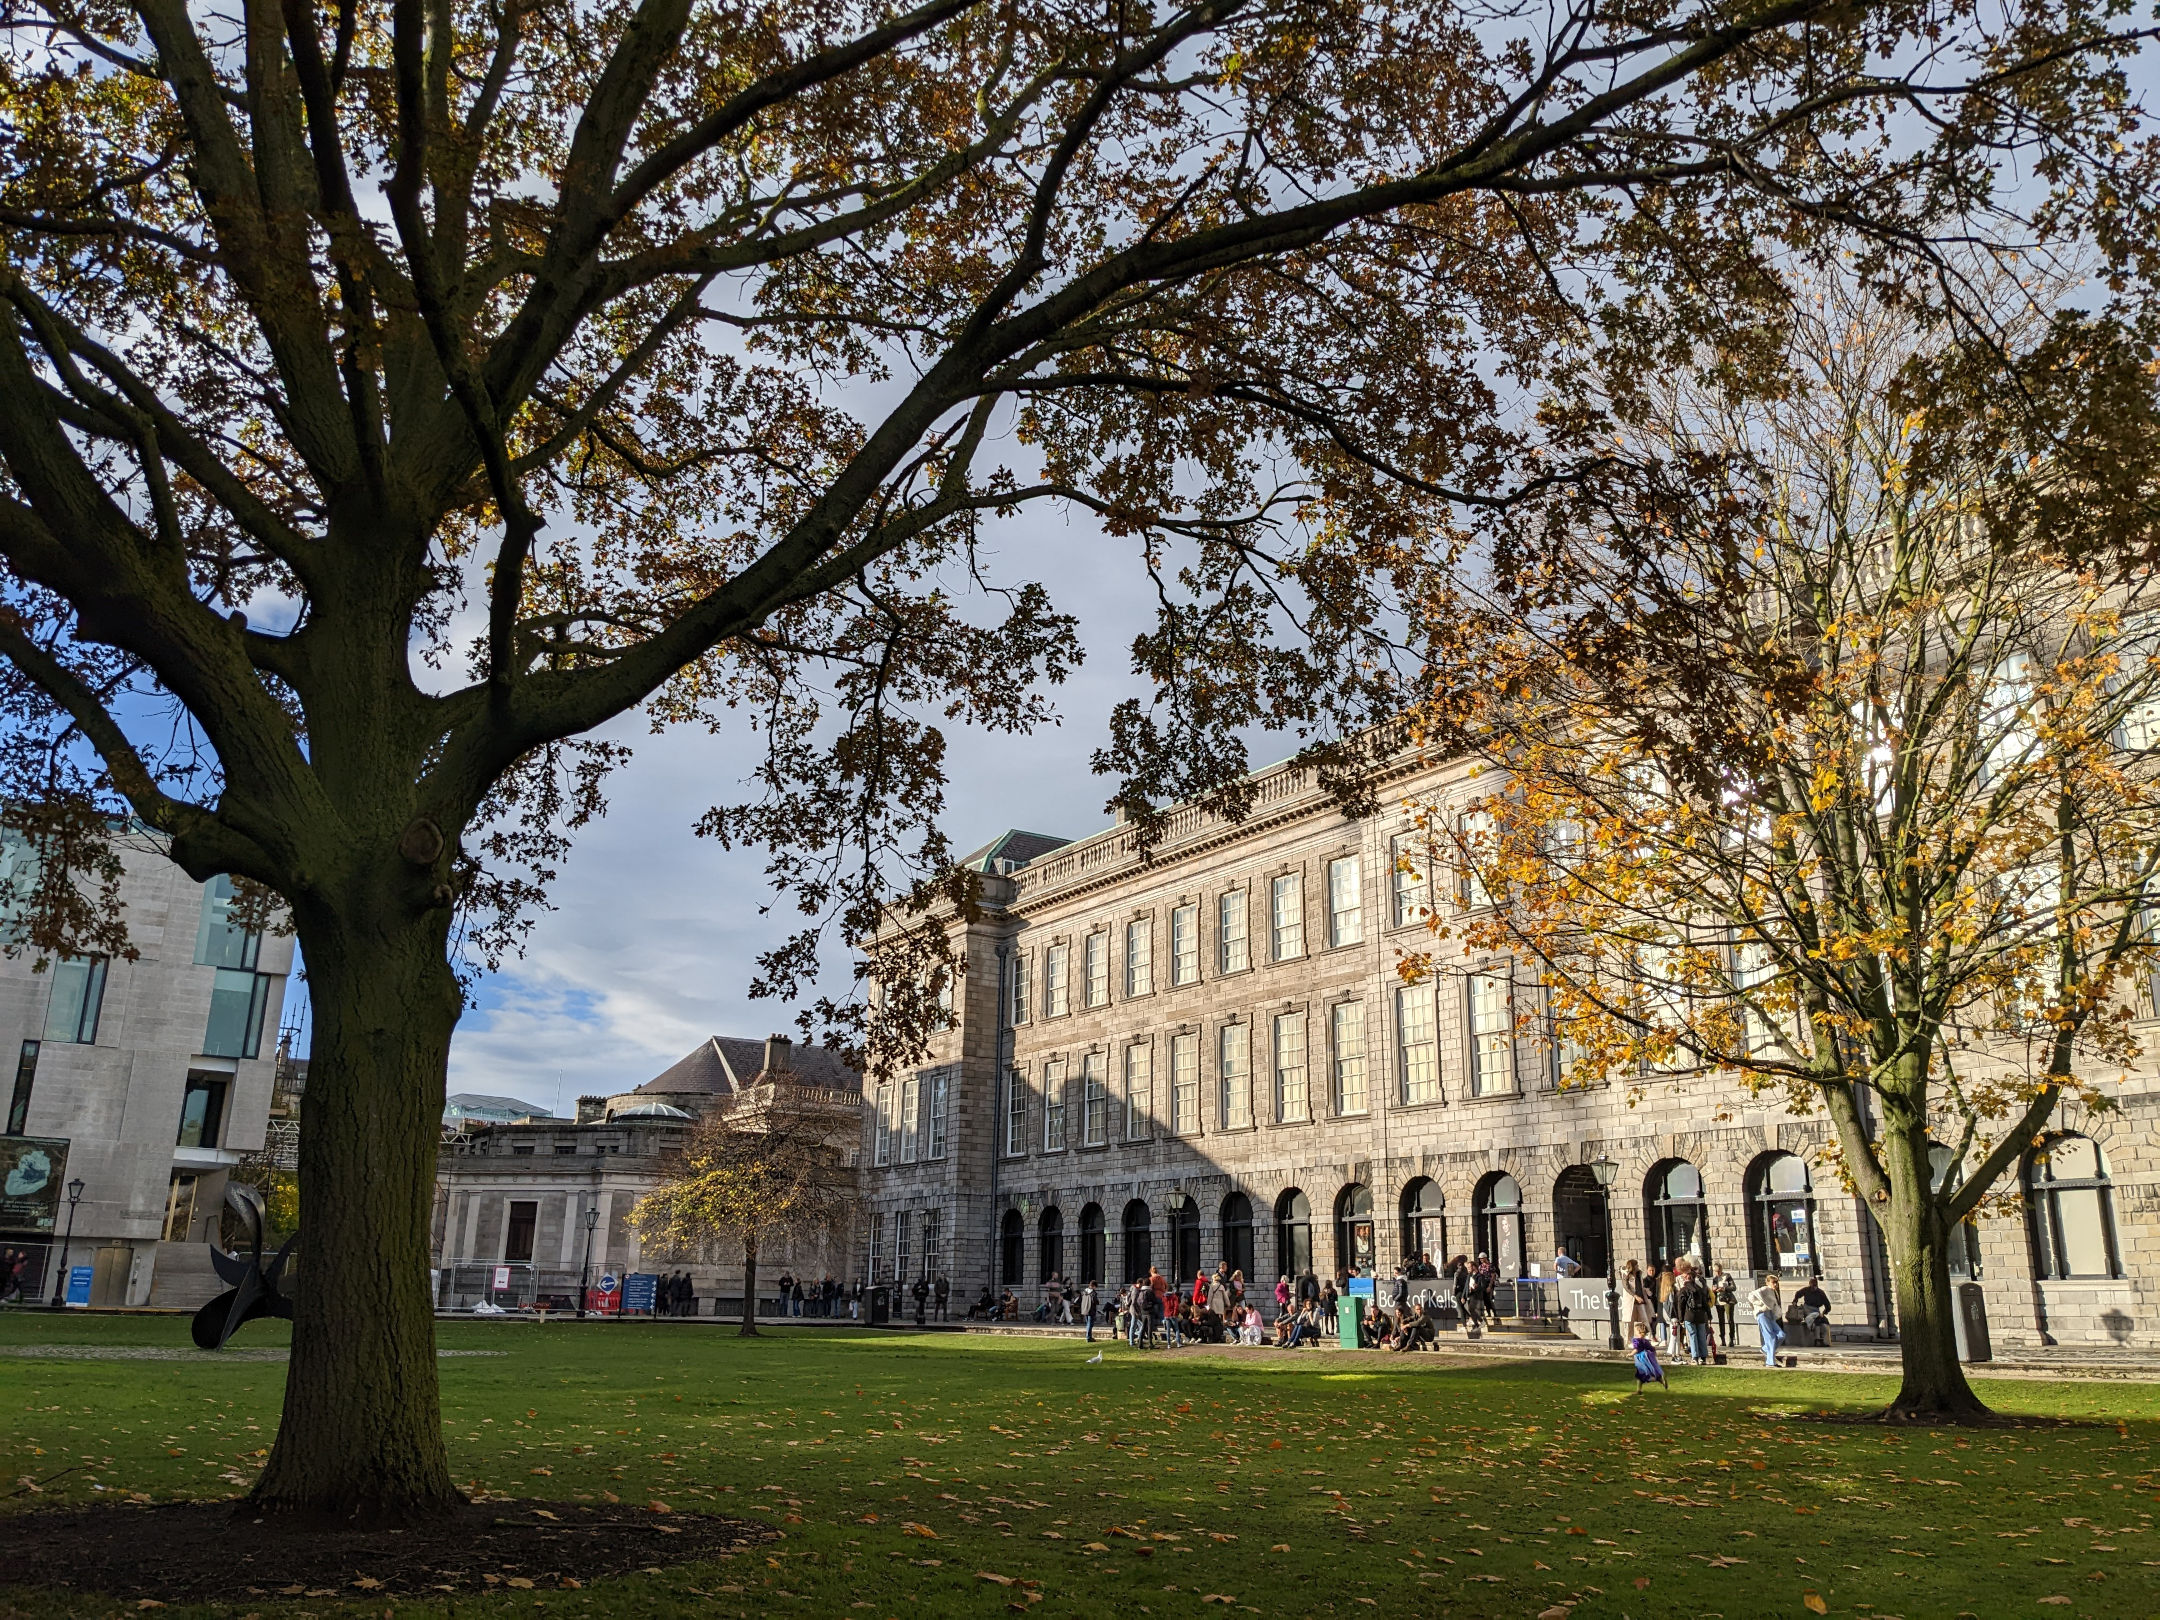 photo : Ireland, Dublin, Trinity College, Library Square